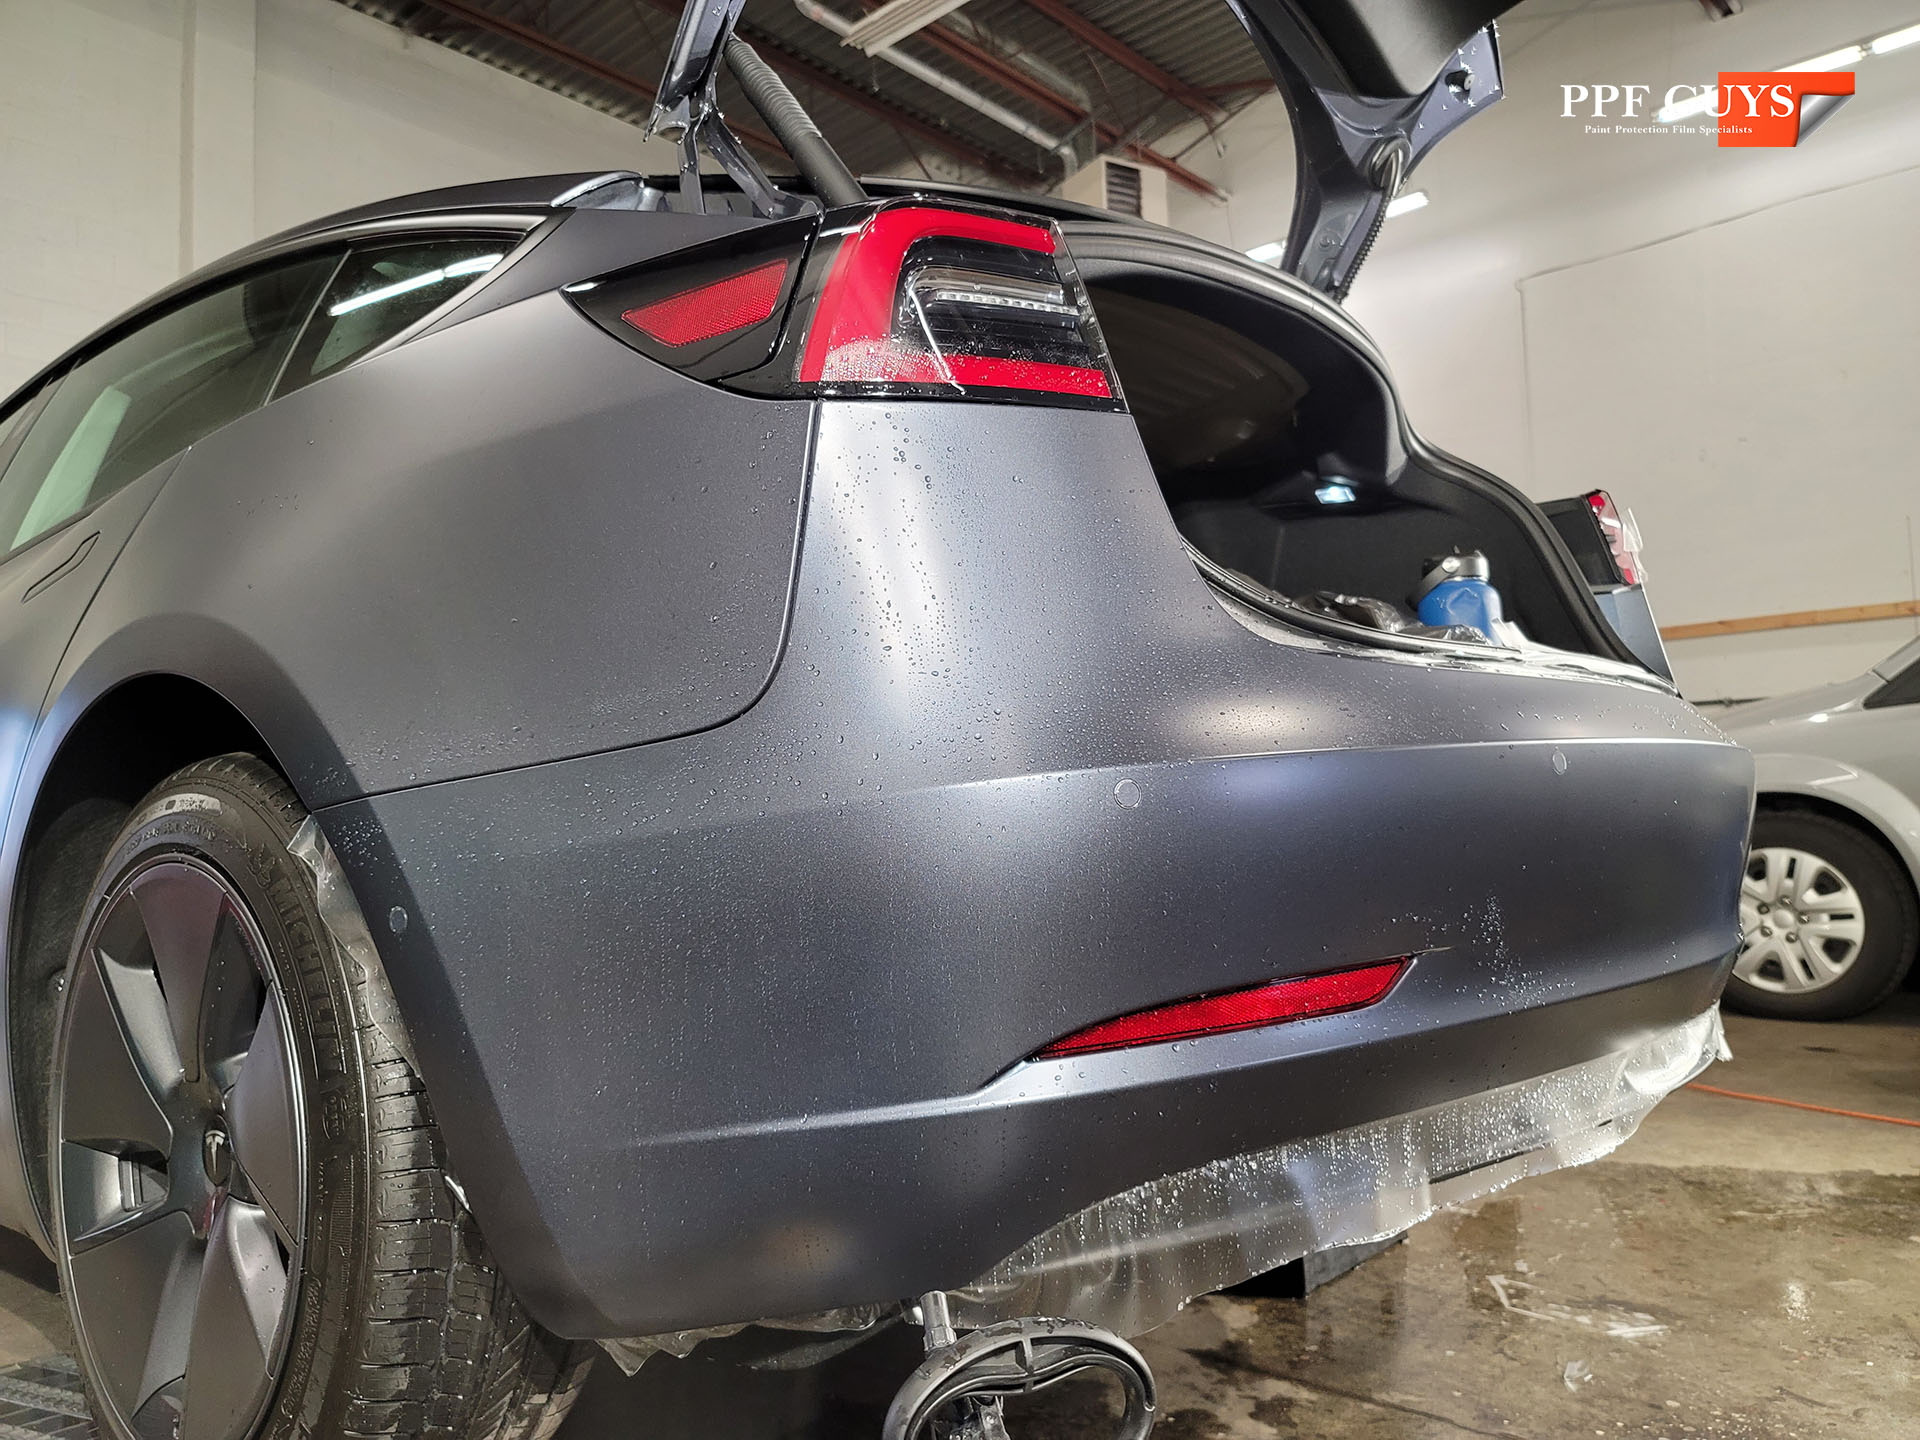 PPF Guys Tesla Model 3 Xpel Stealth (10).jpg